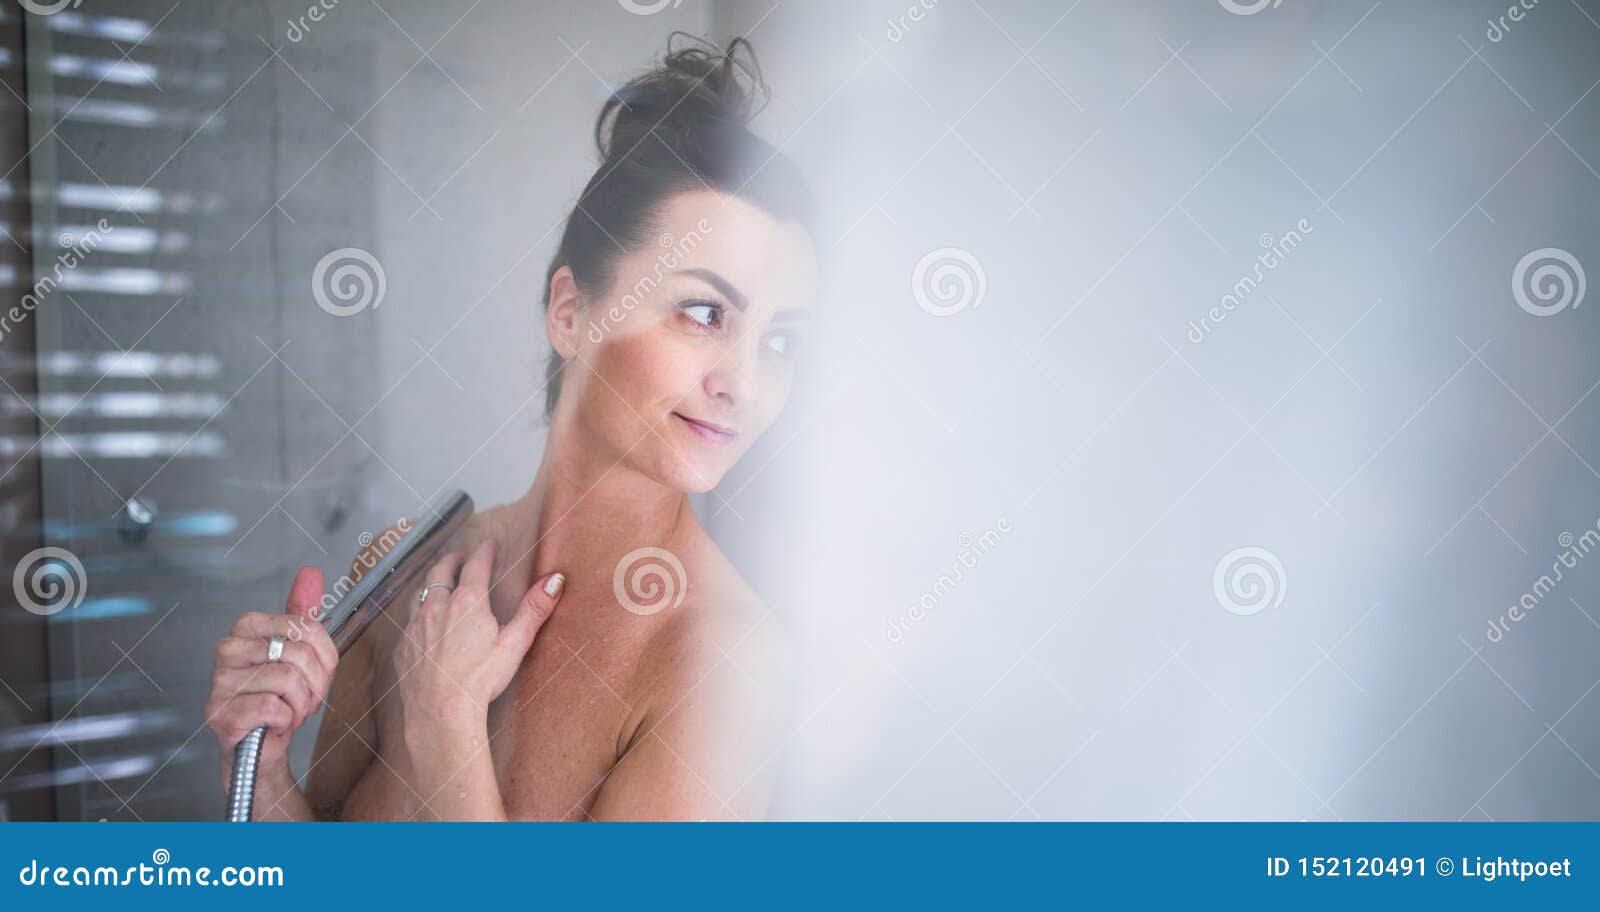 Beautiful naked woman washing her hair while taking shower 